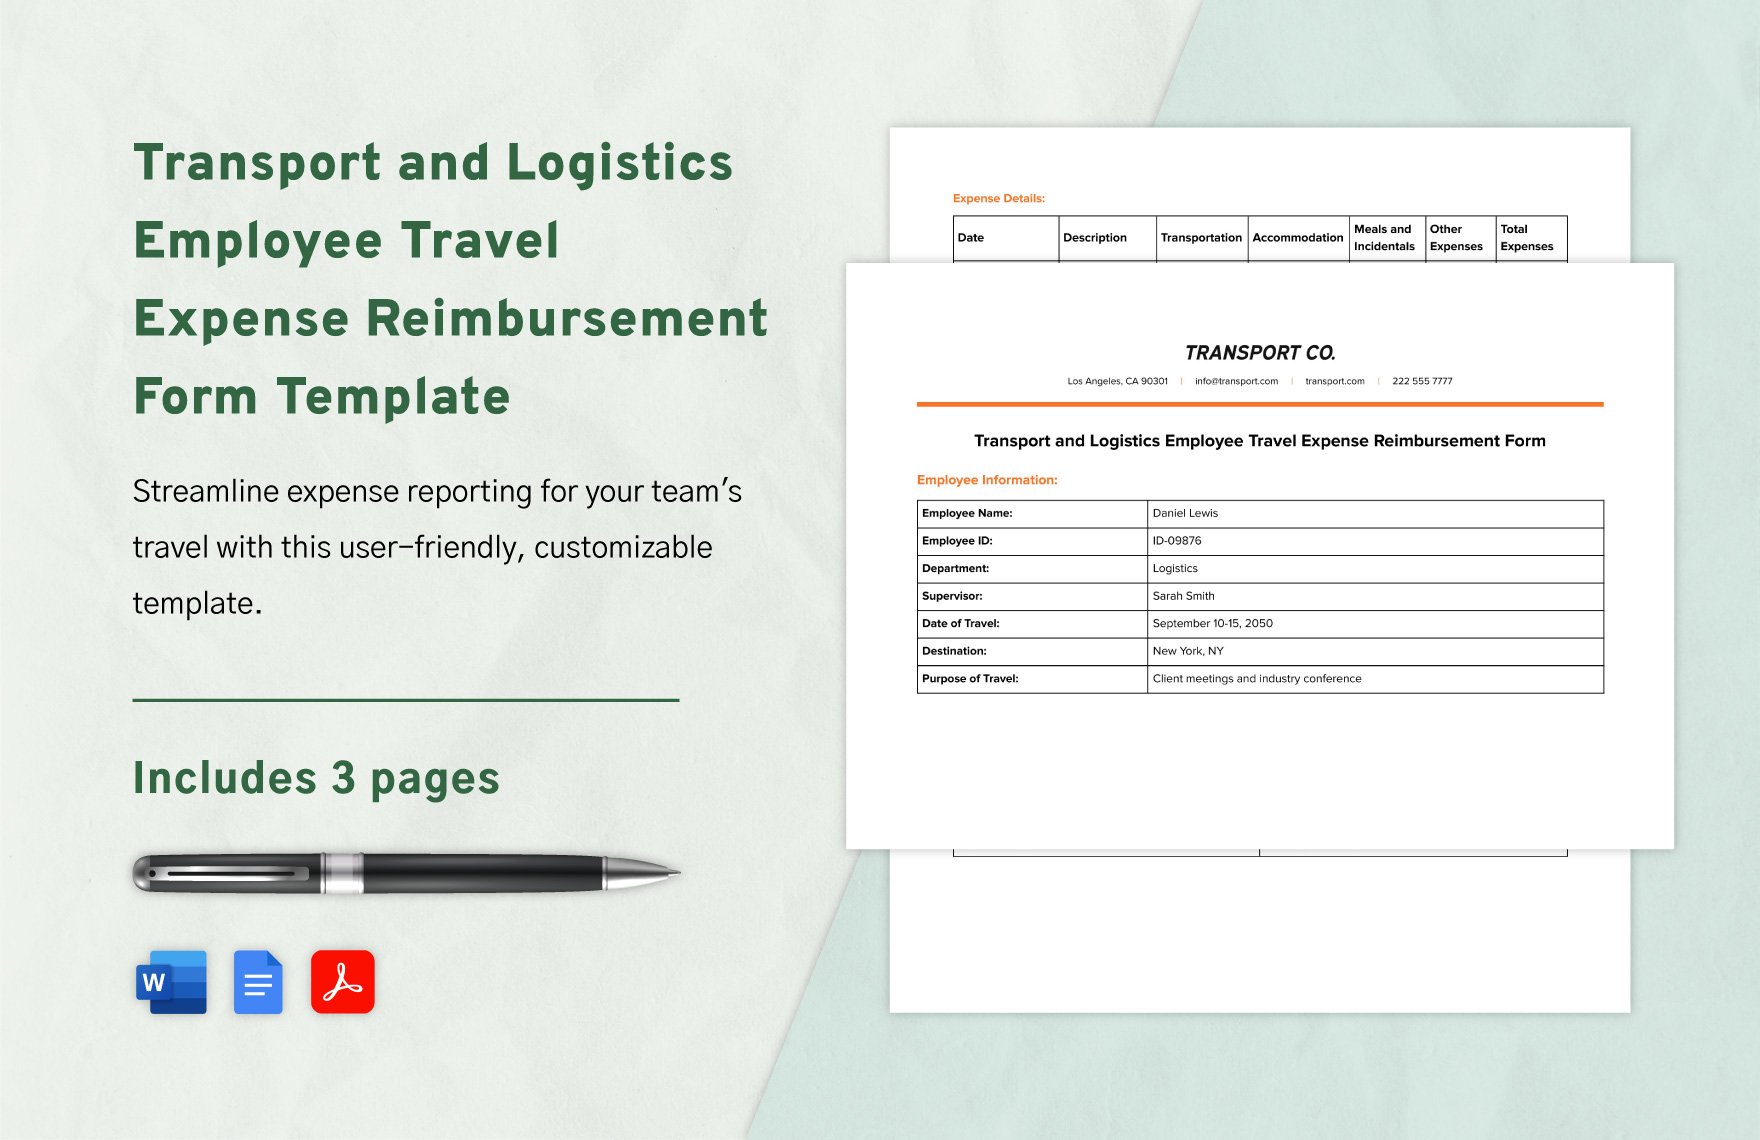 Transport and Logistics Employee Travel Expense Reimbursement Form Template in Word, Google Docs, PDF